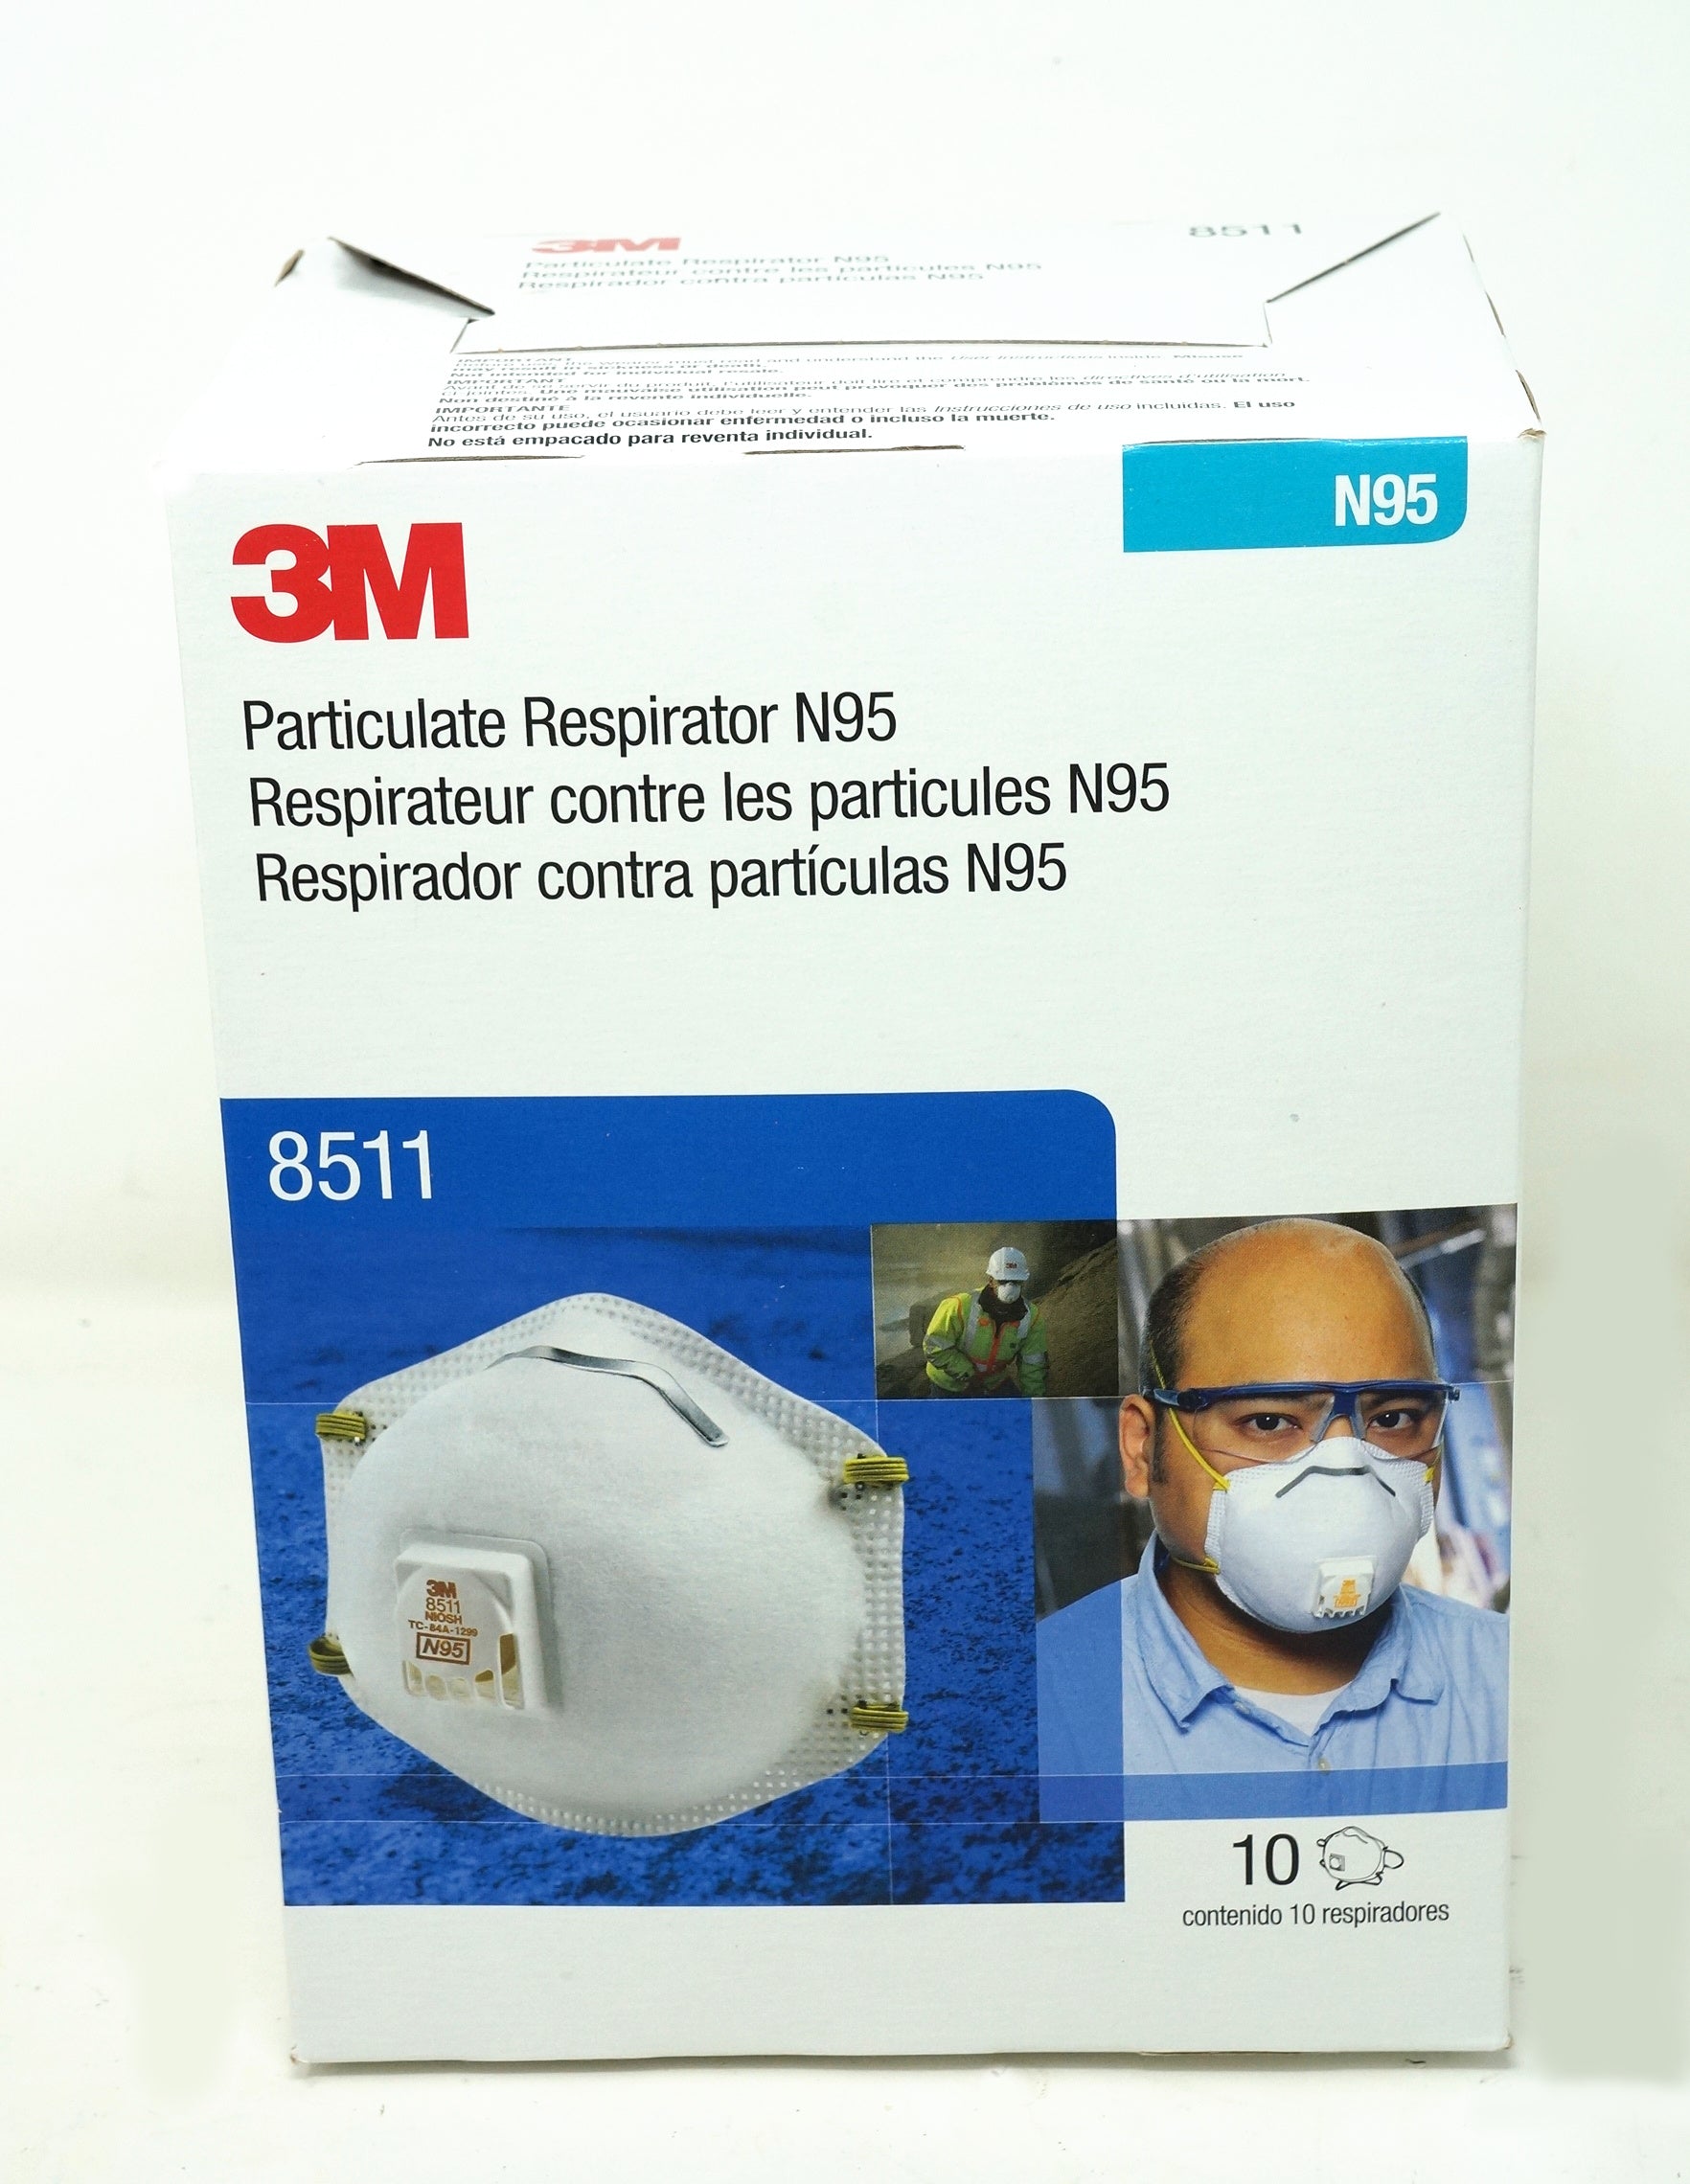 3M™ Particulate Respirator 8511 N95